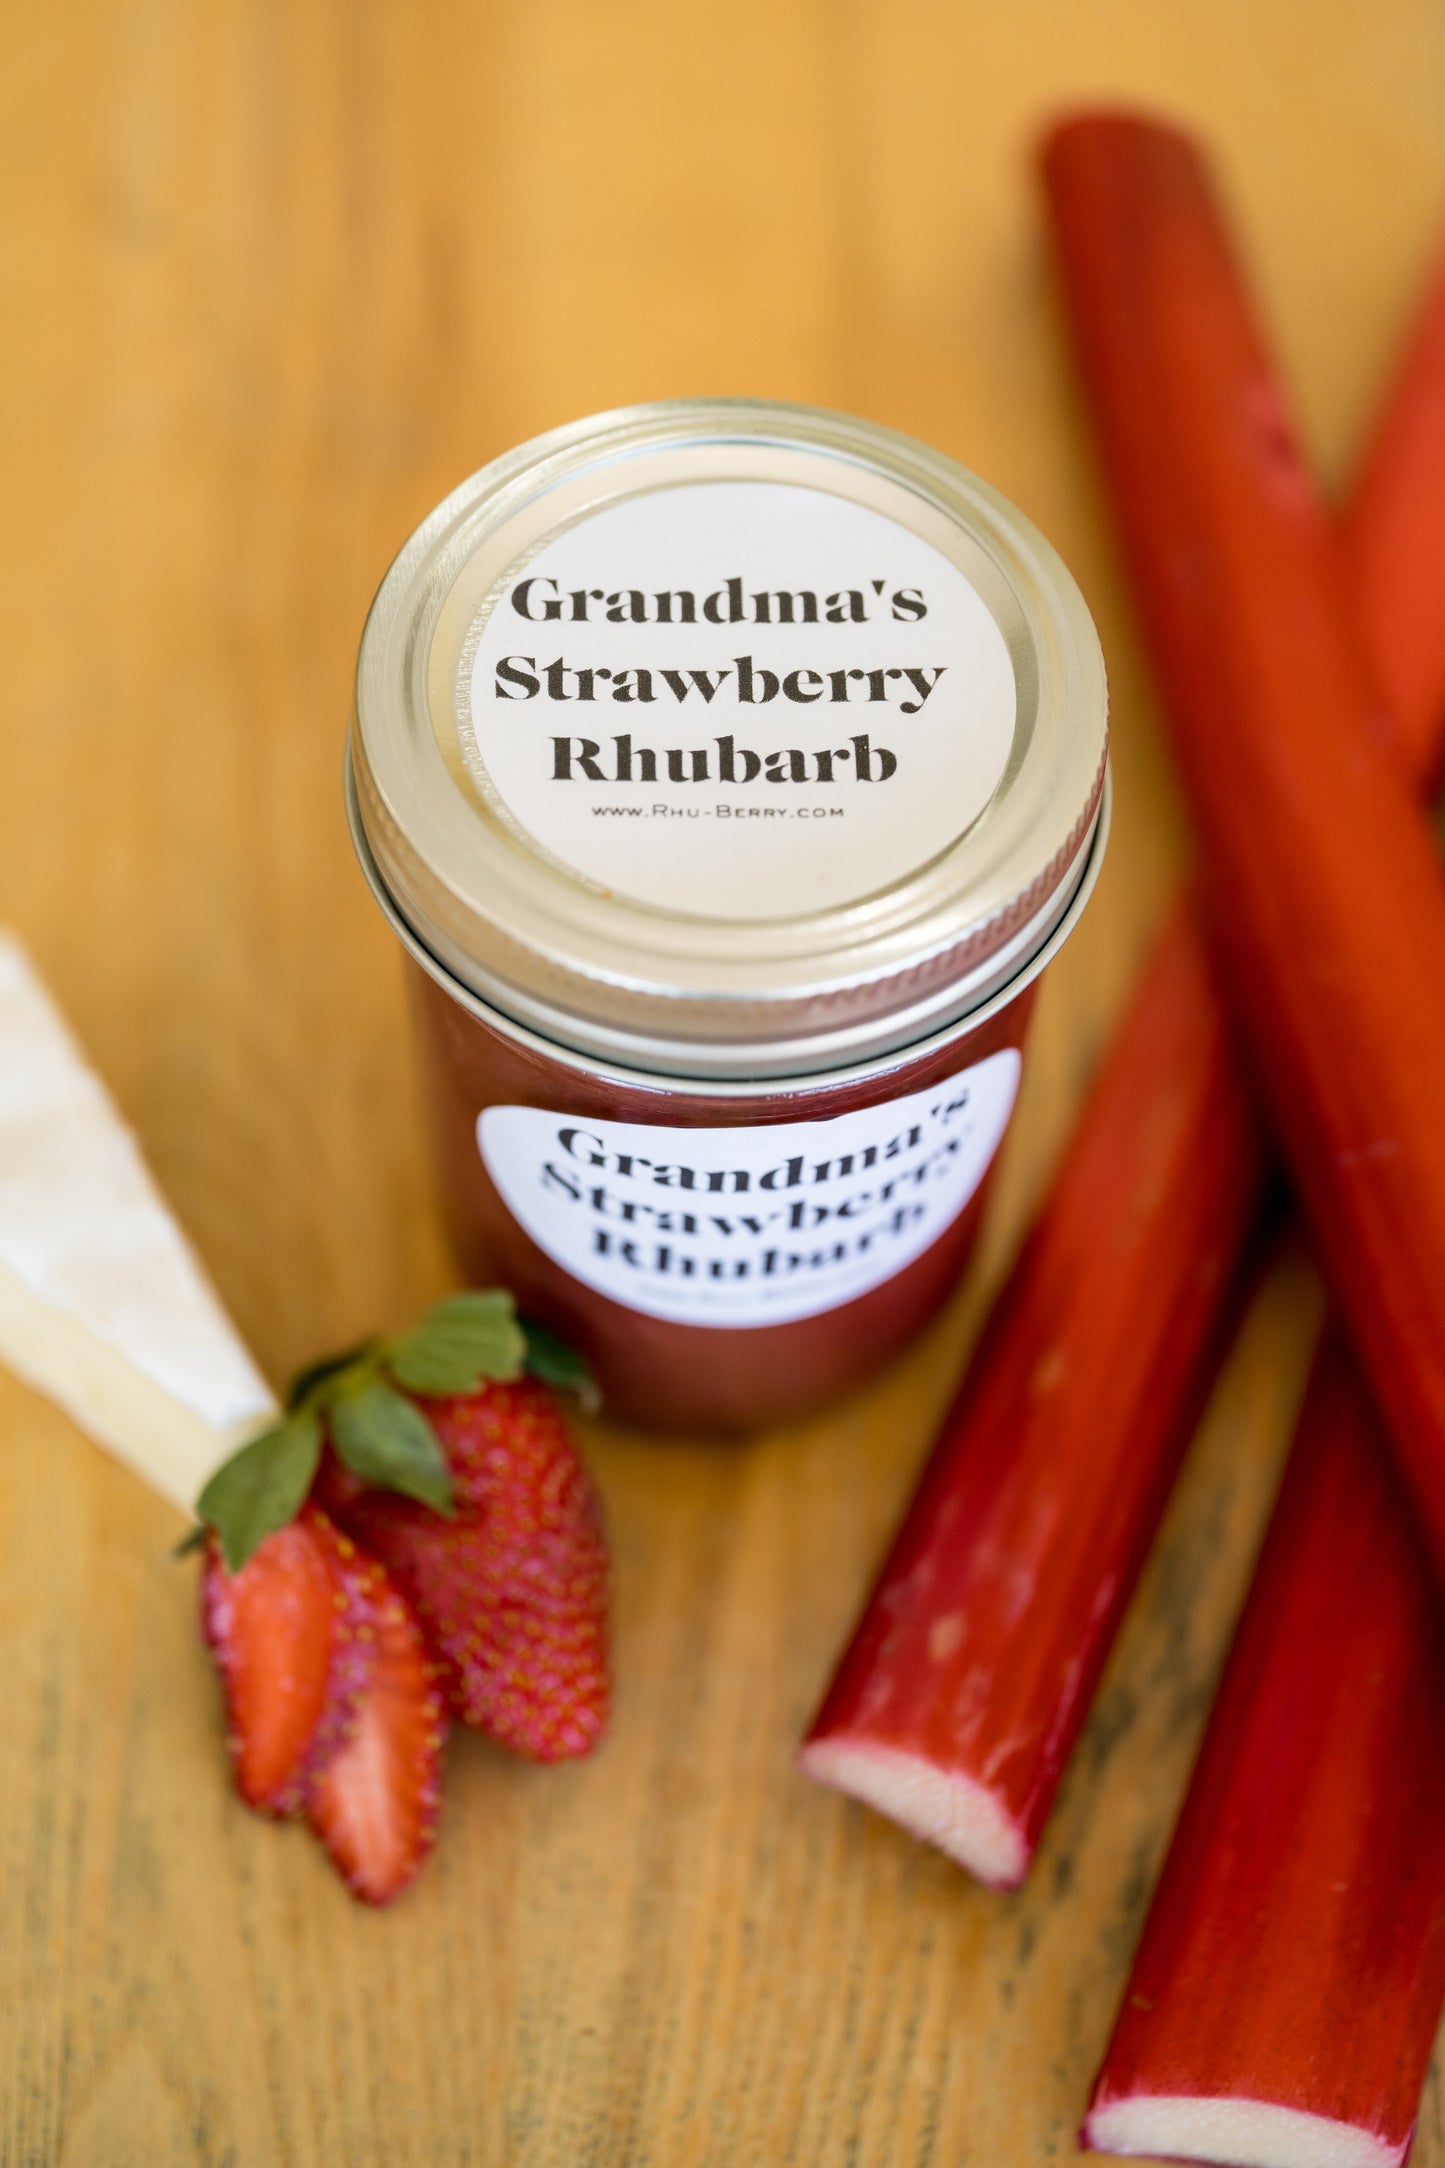 Grandma's Strawberry Rhubarb Jam